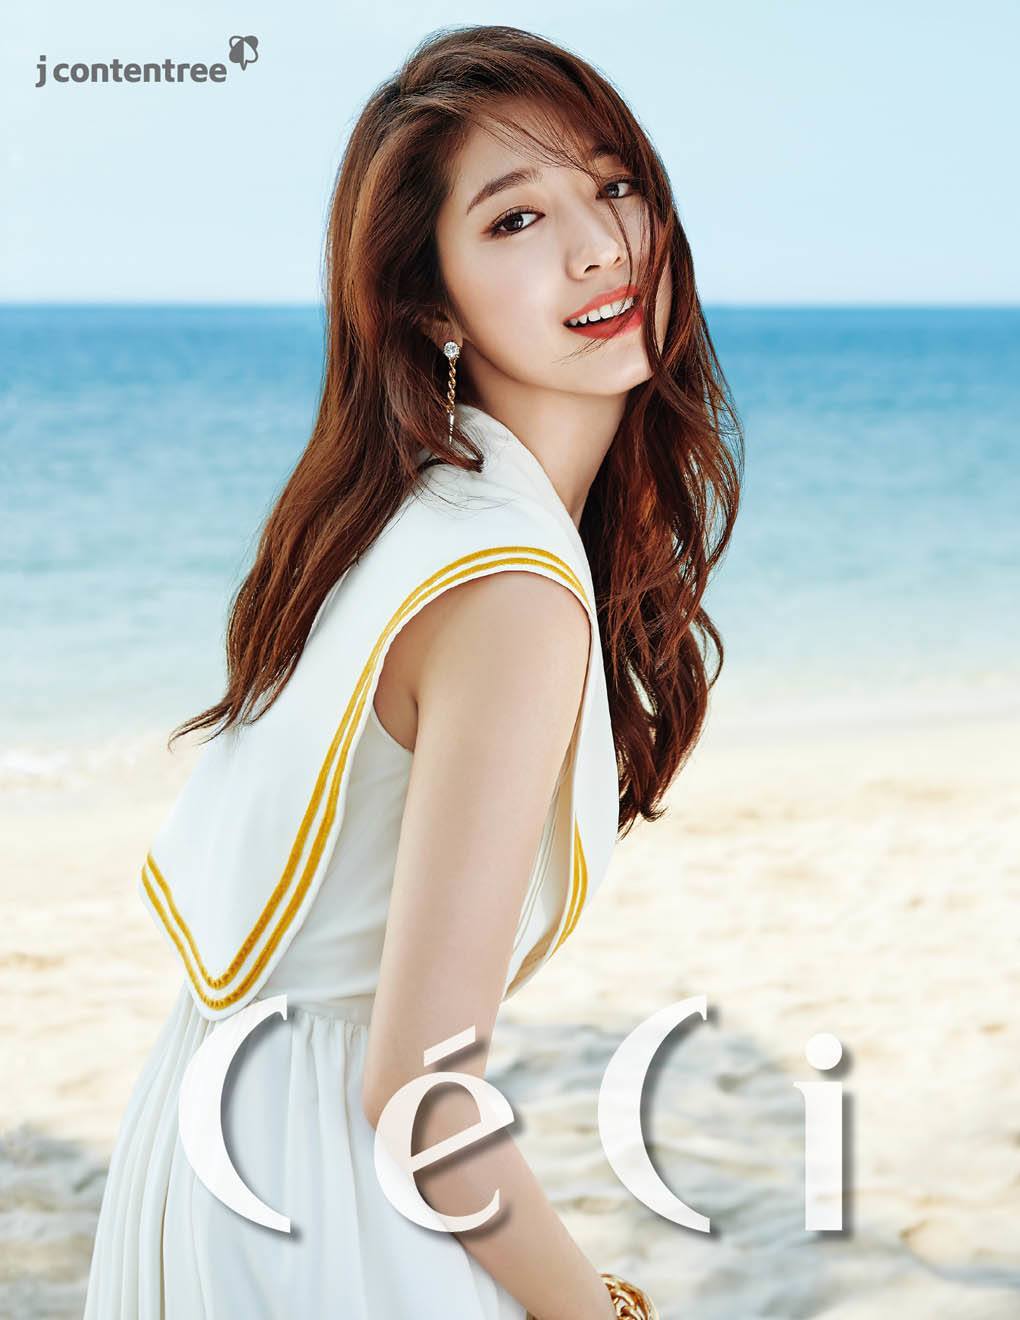 Park Shin Hye is a radiant beach beauty for "Ceci" magazine